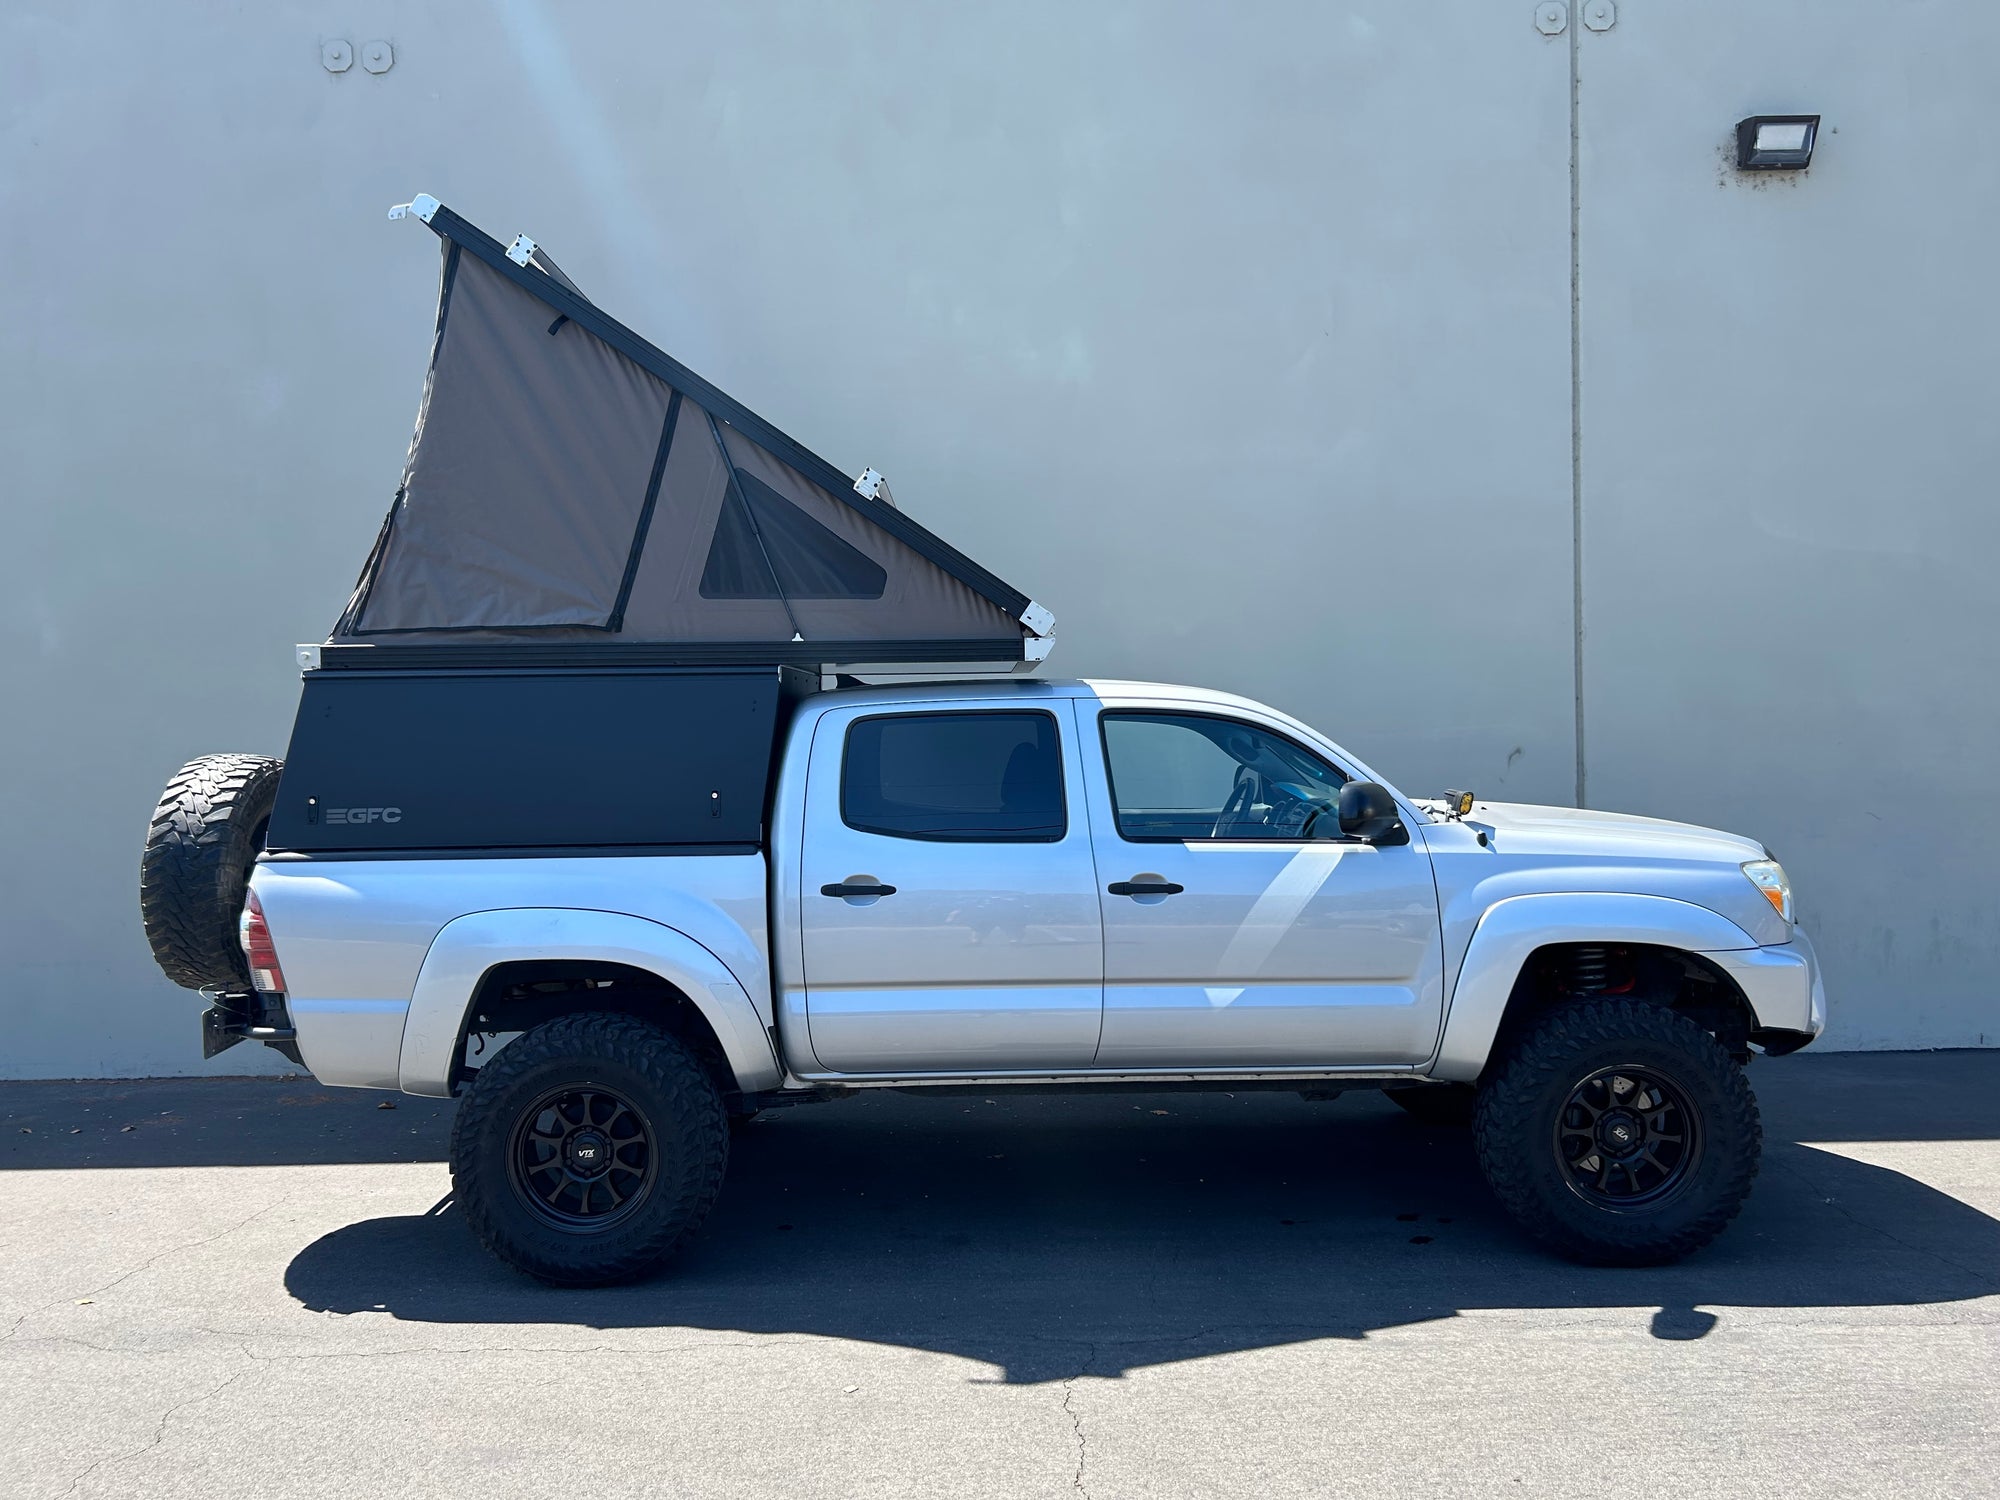 2015 Toyota Tacoma Camper - Build #5417 - GoFastCampers